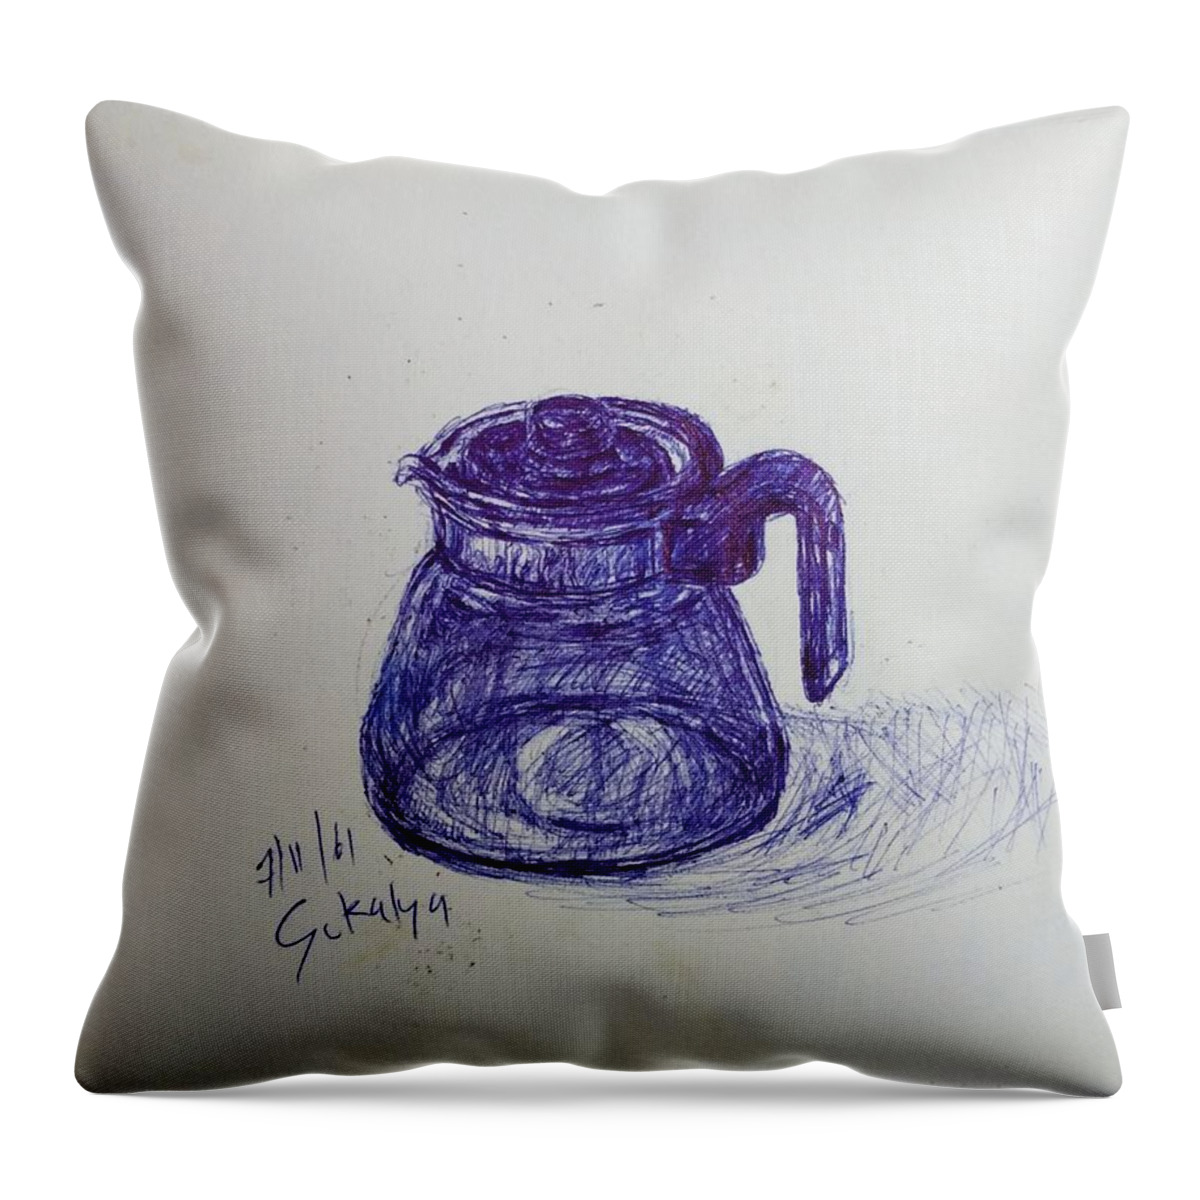 Jar Throw Pillow featuring the drawing A sketching by Sukalya Chearanantana